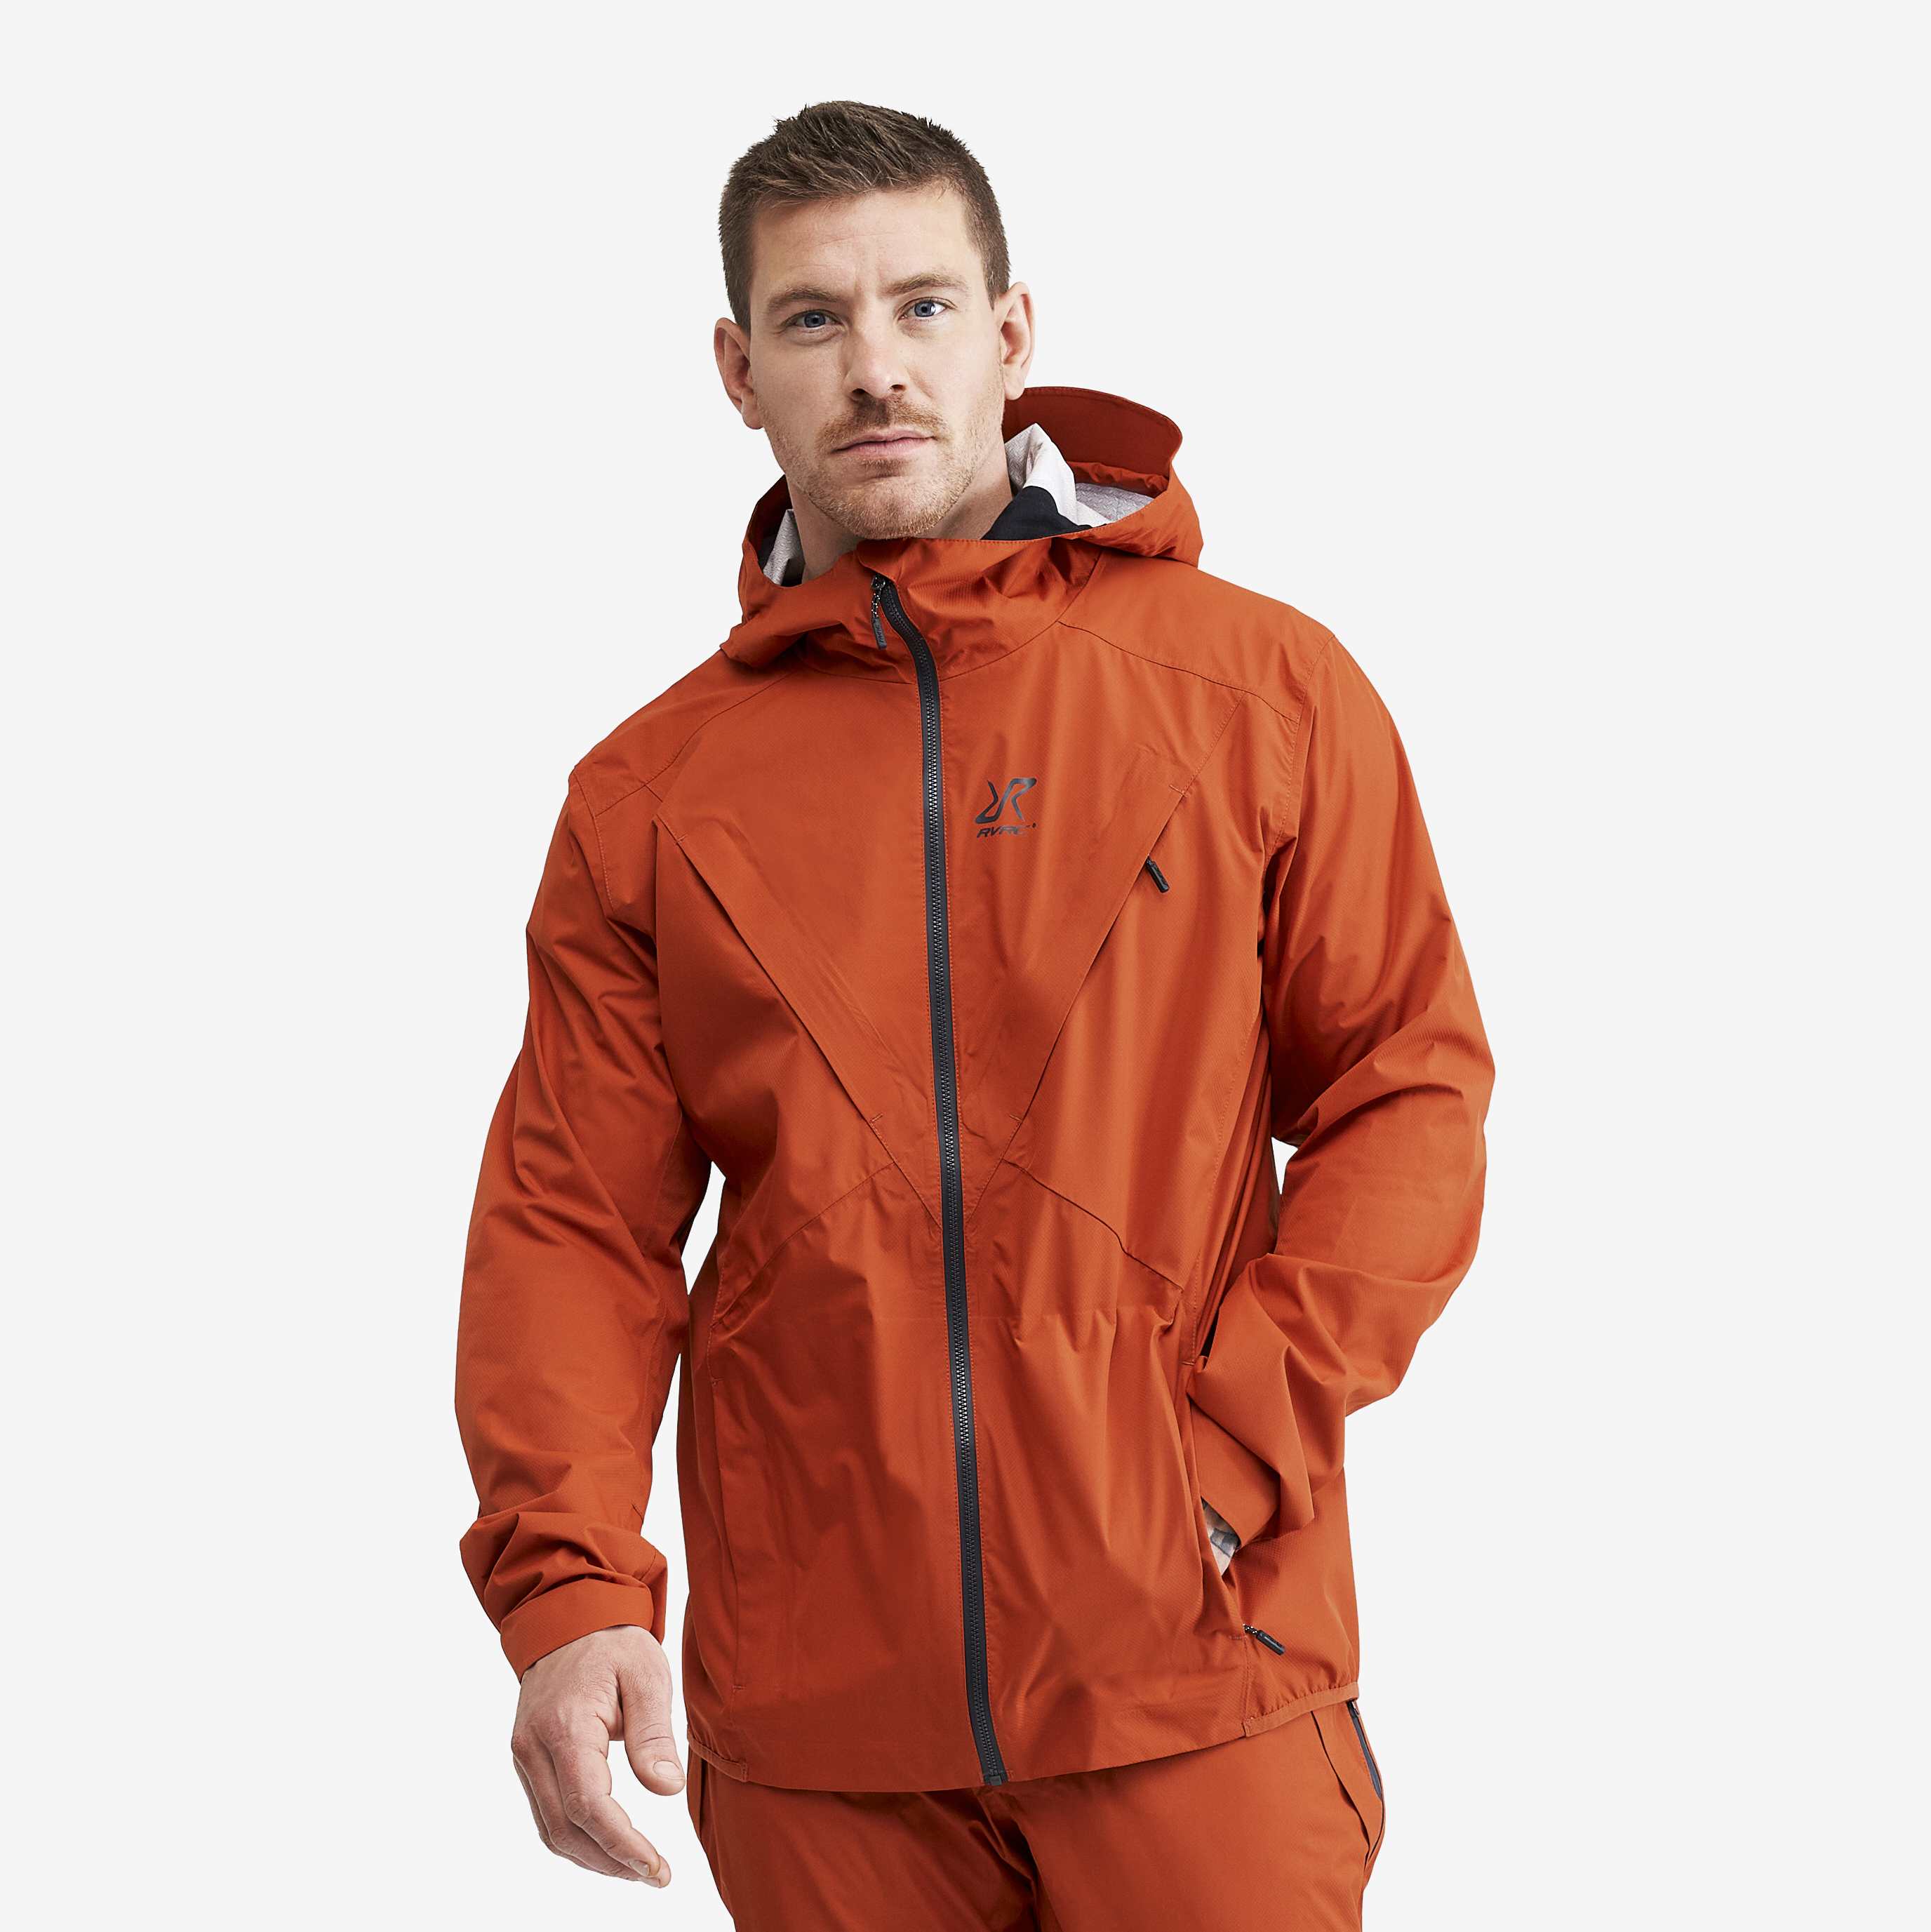 Typhoon rain jacket for men in orange